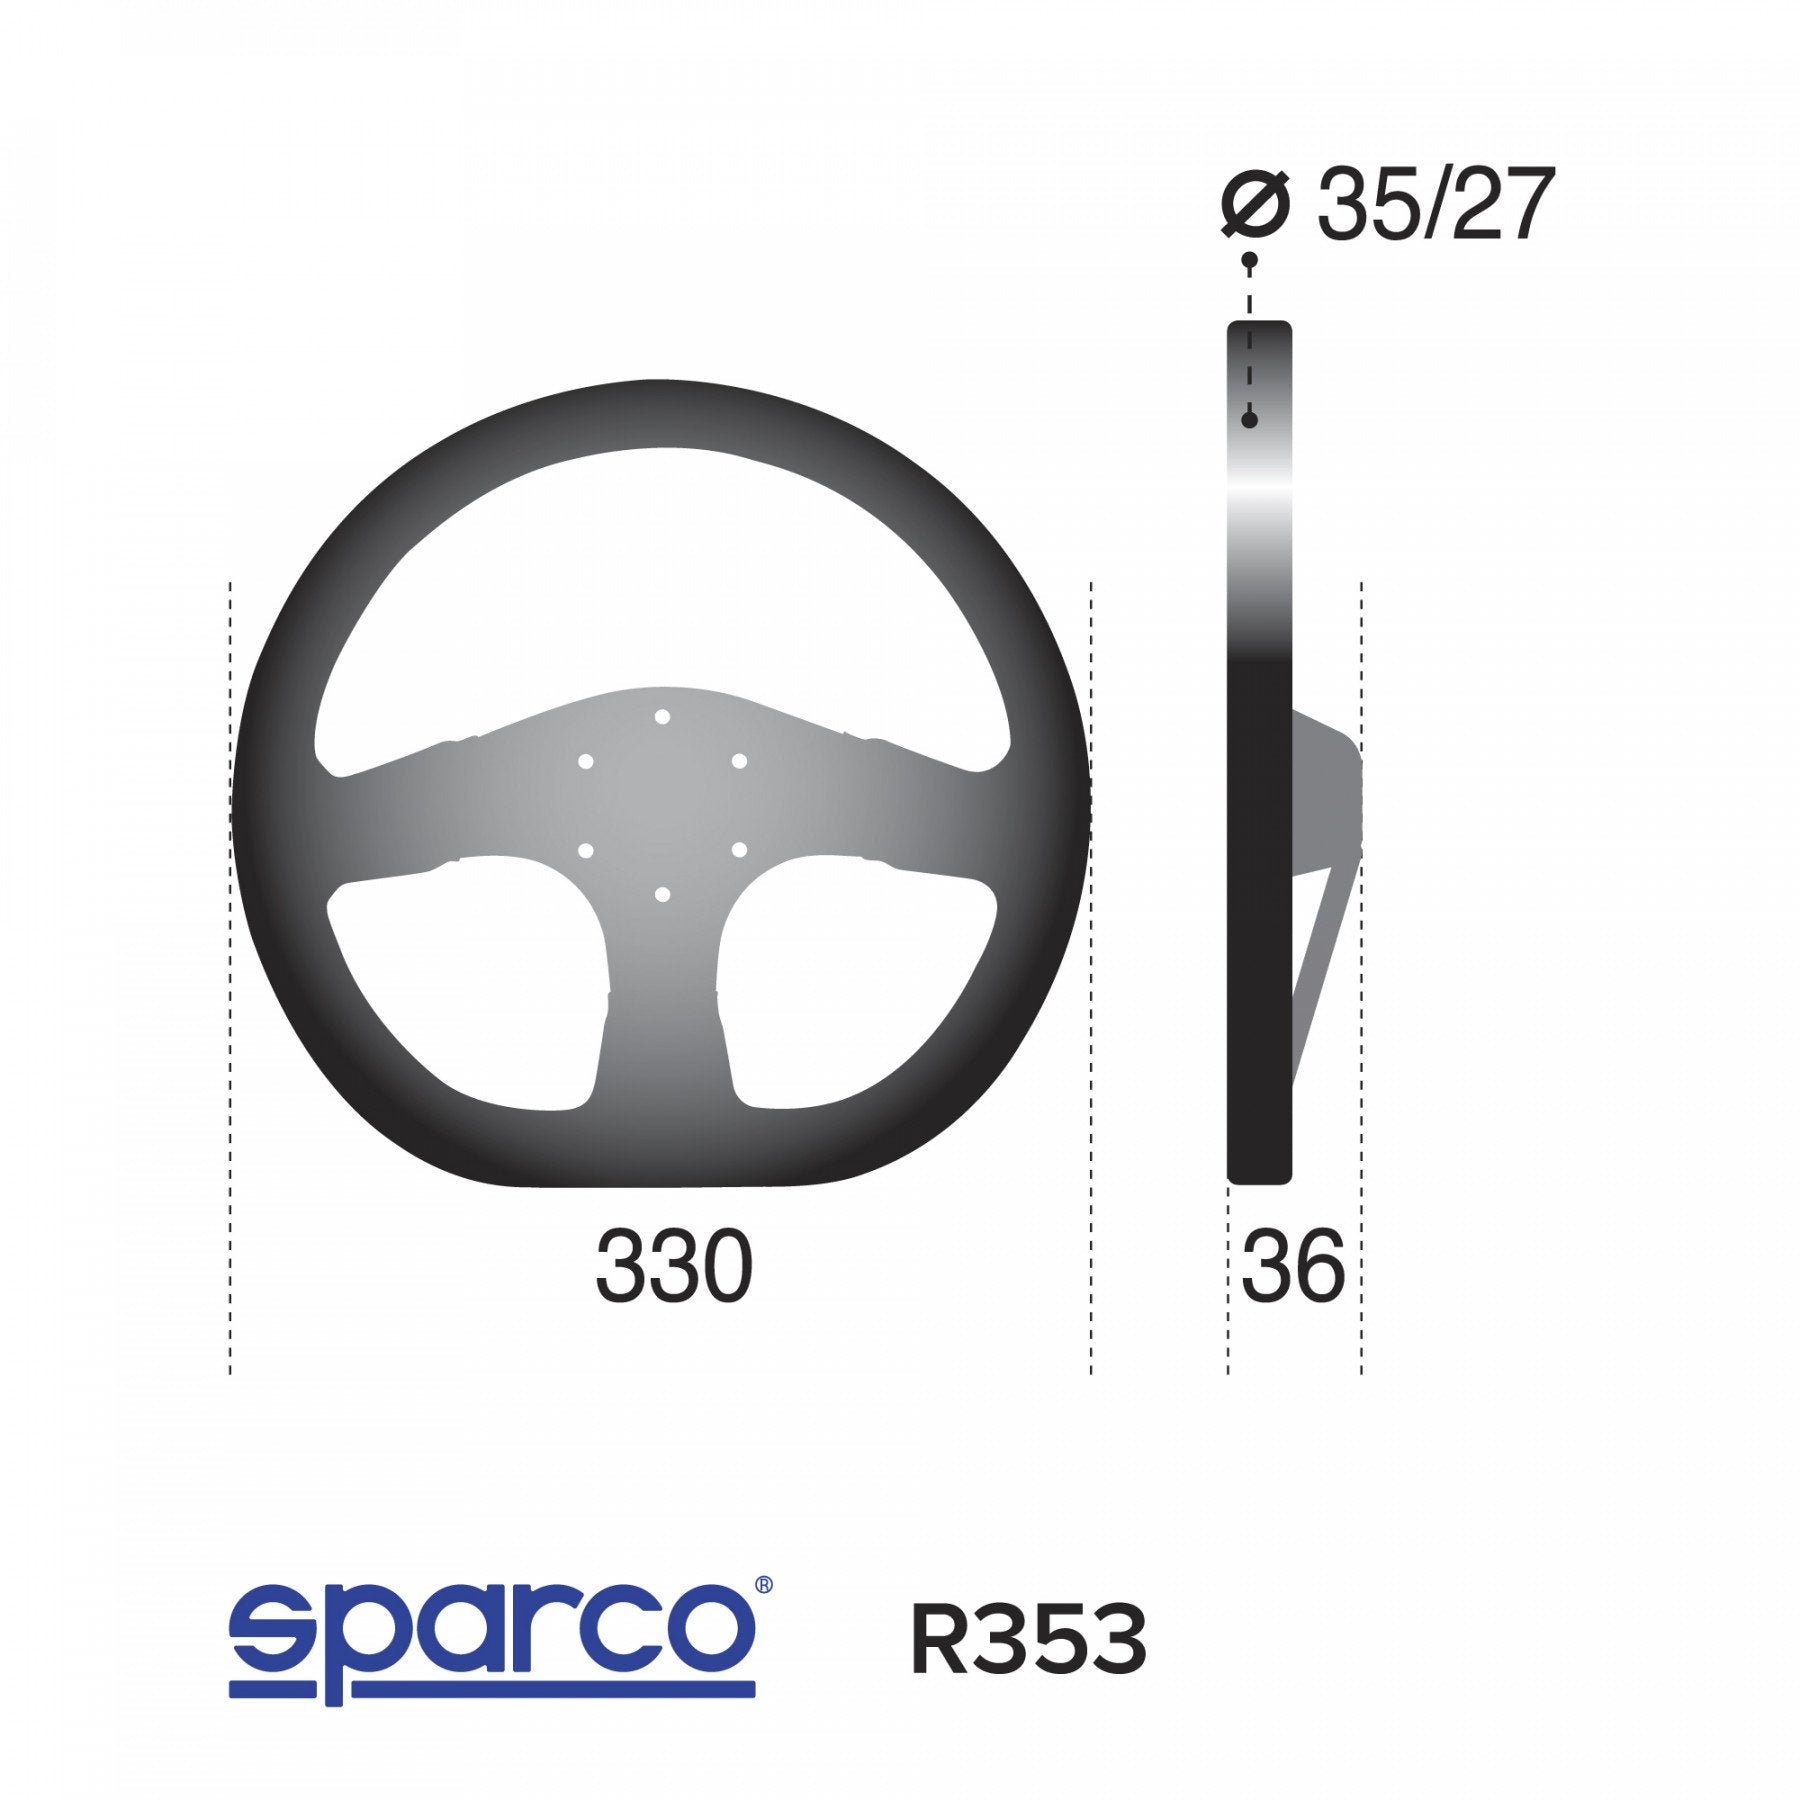 Sparco® R353 Rim